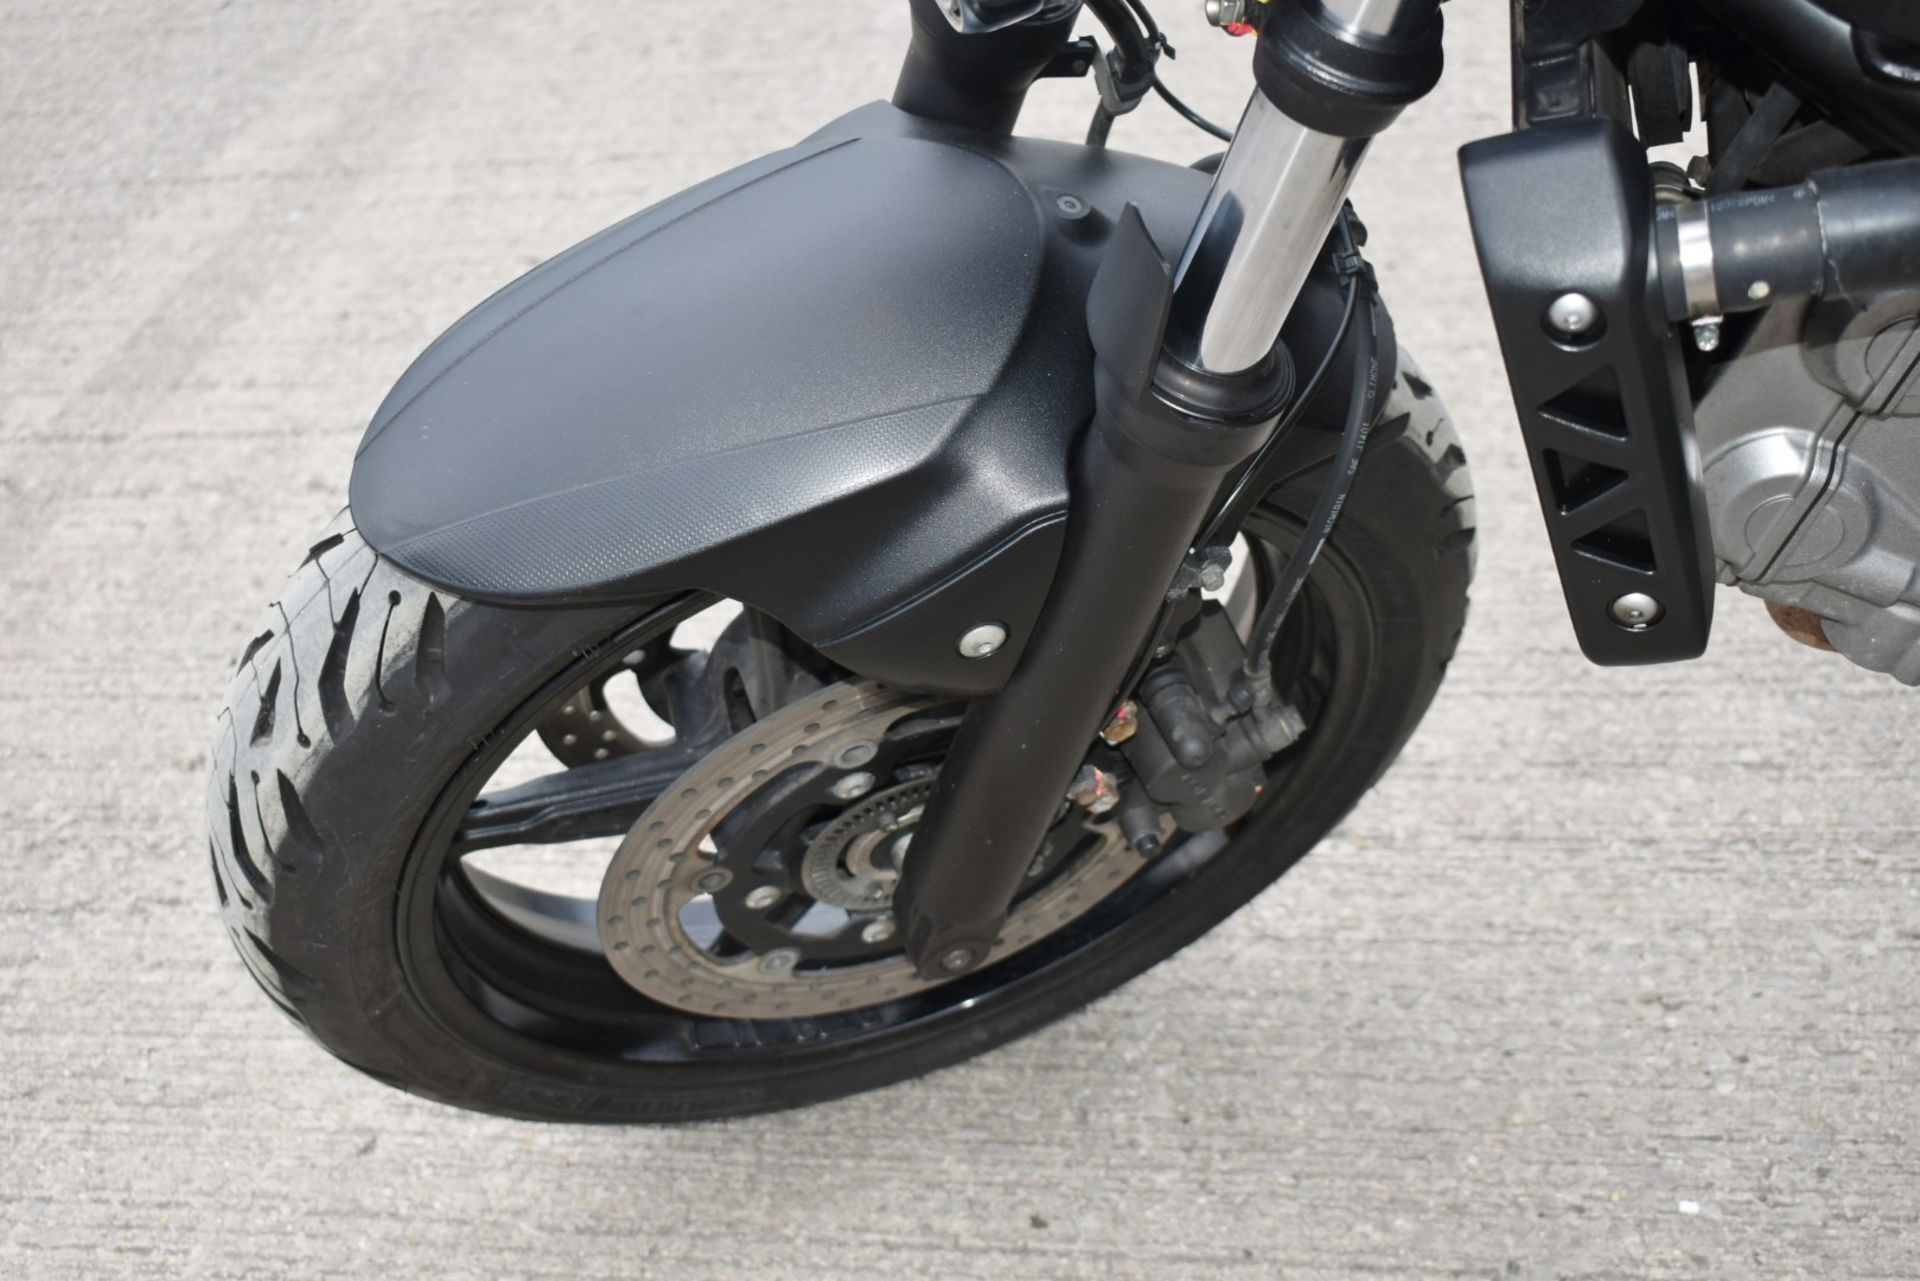 2018 Suzuki SV650 Motorcycle - BA18 UFV - Mileage: 18,188 - Image 22 of 25